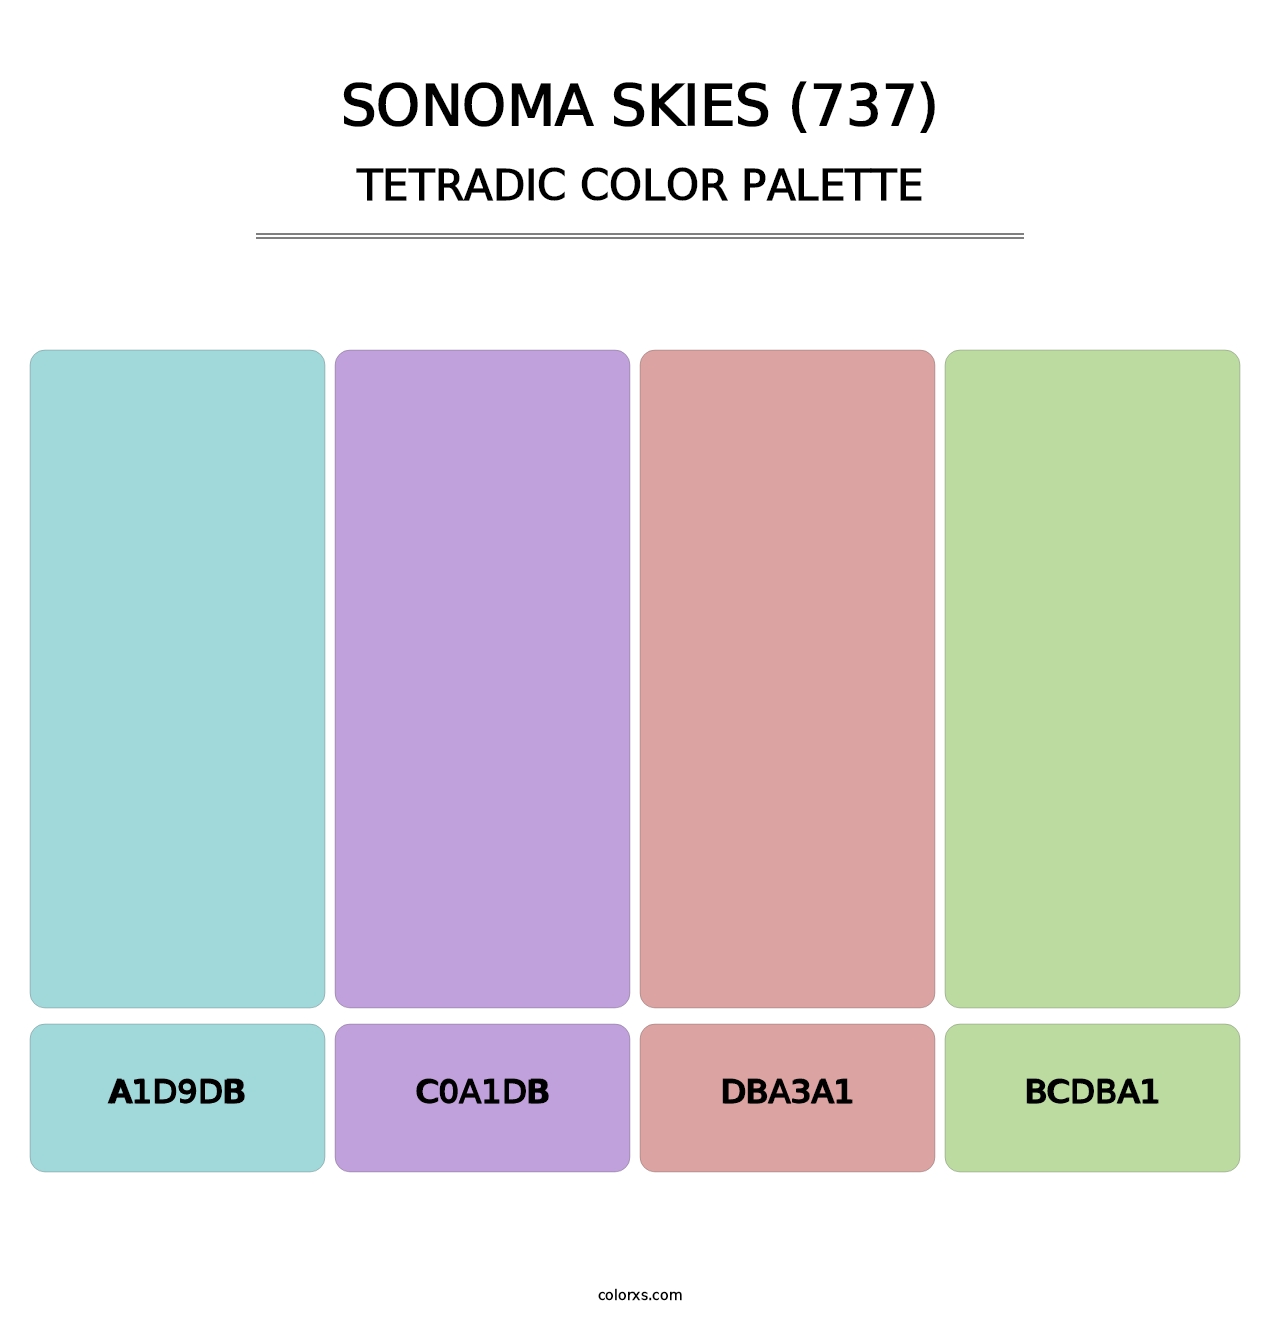 Sonoma Skies (737) - Tetradic Color Palette